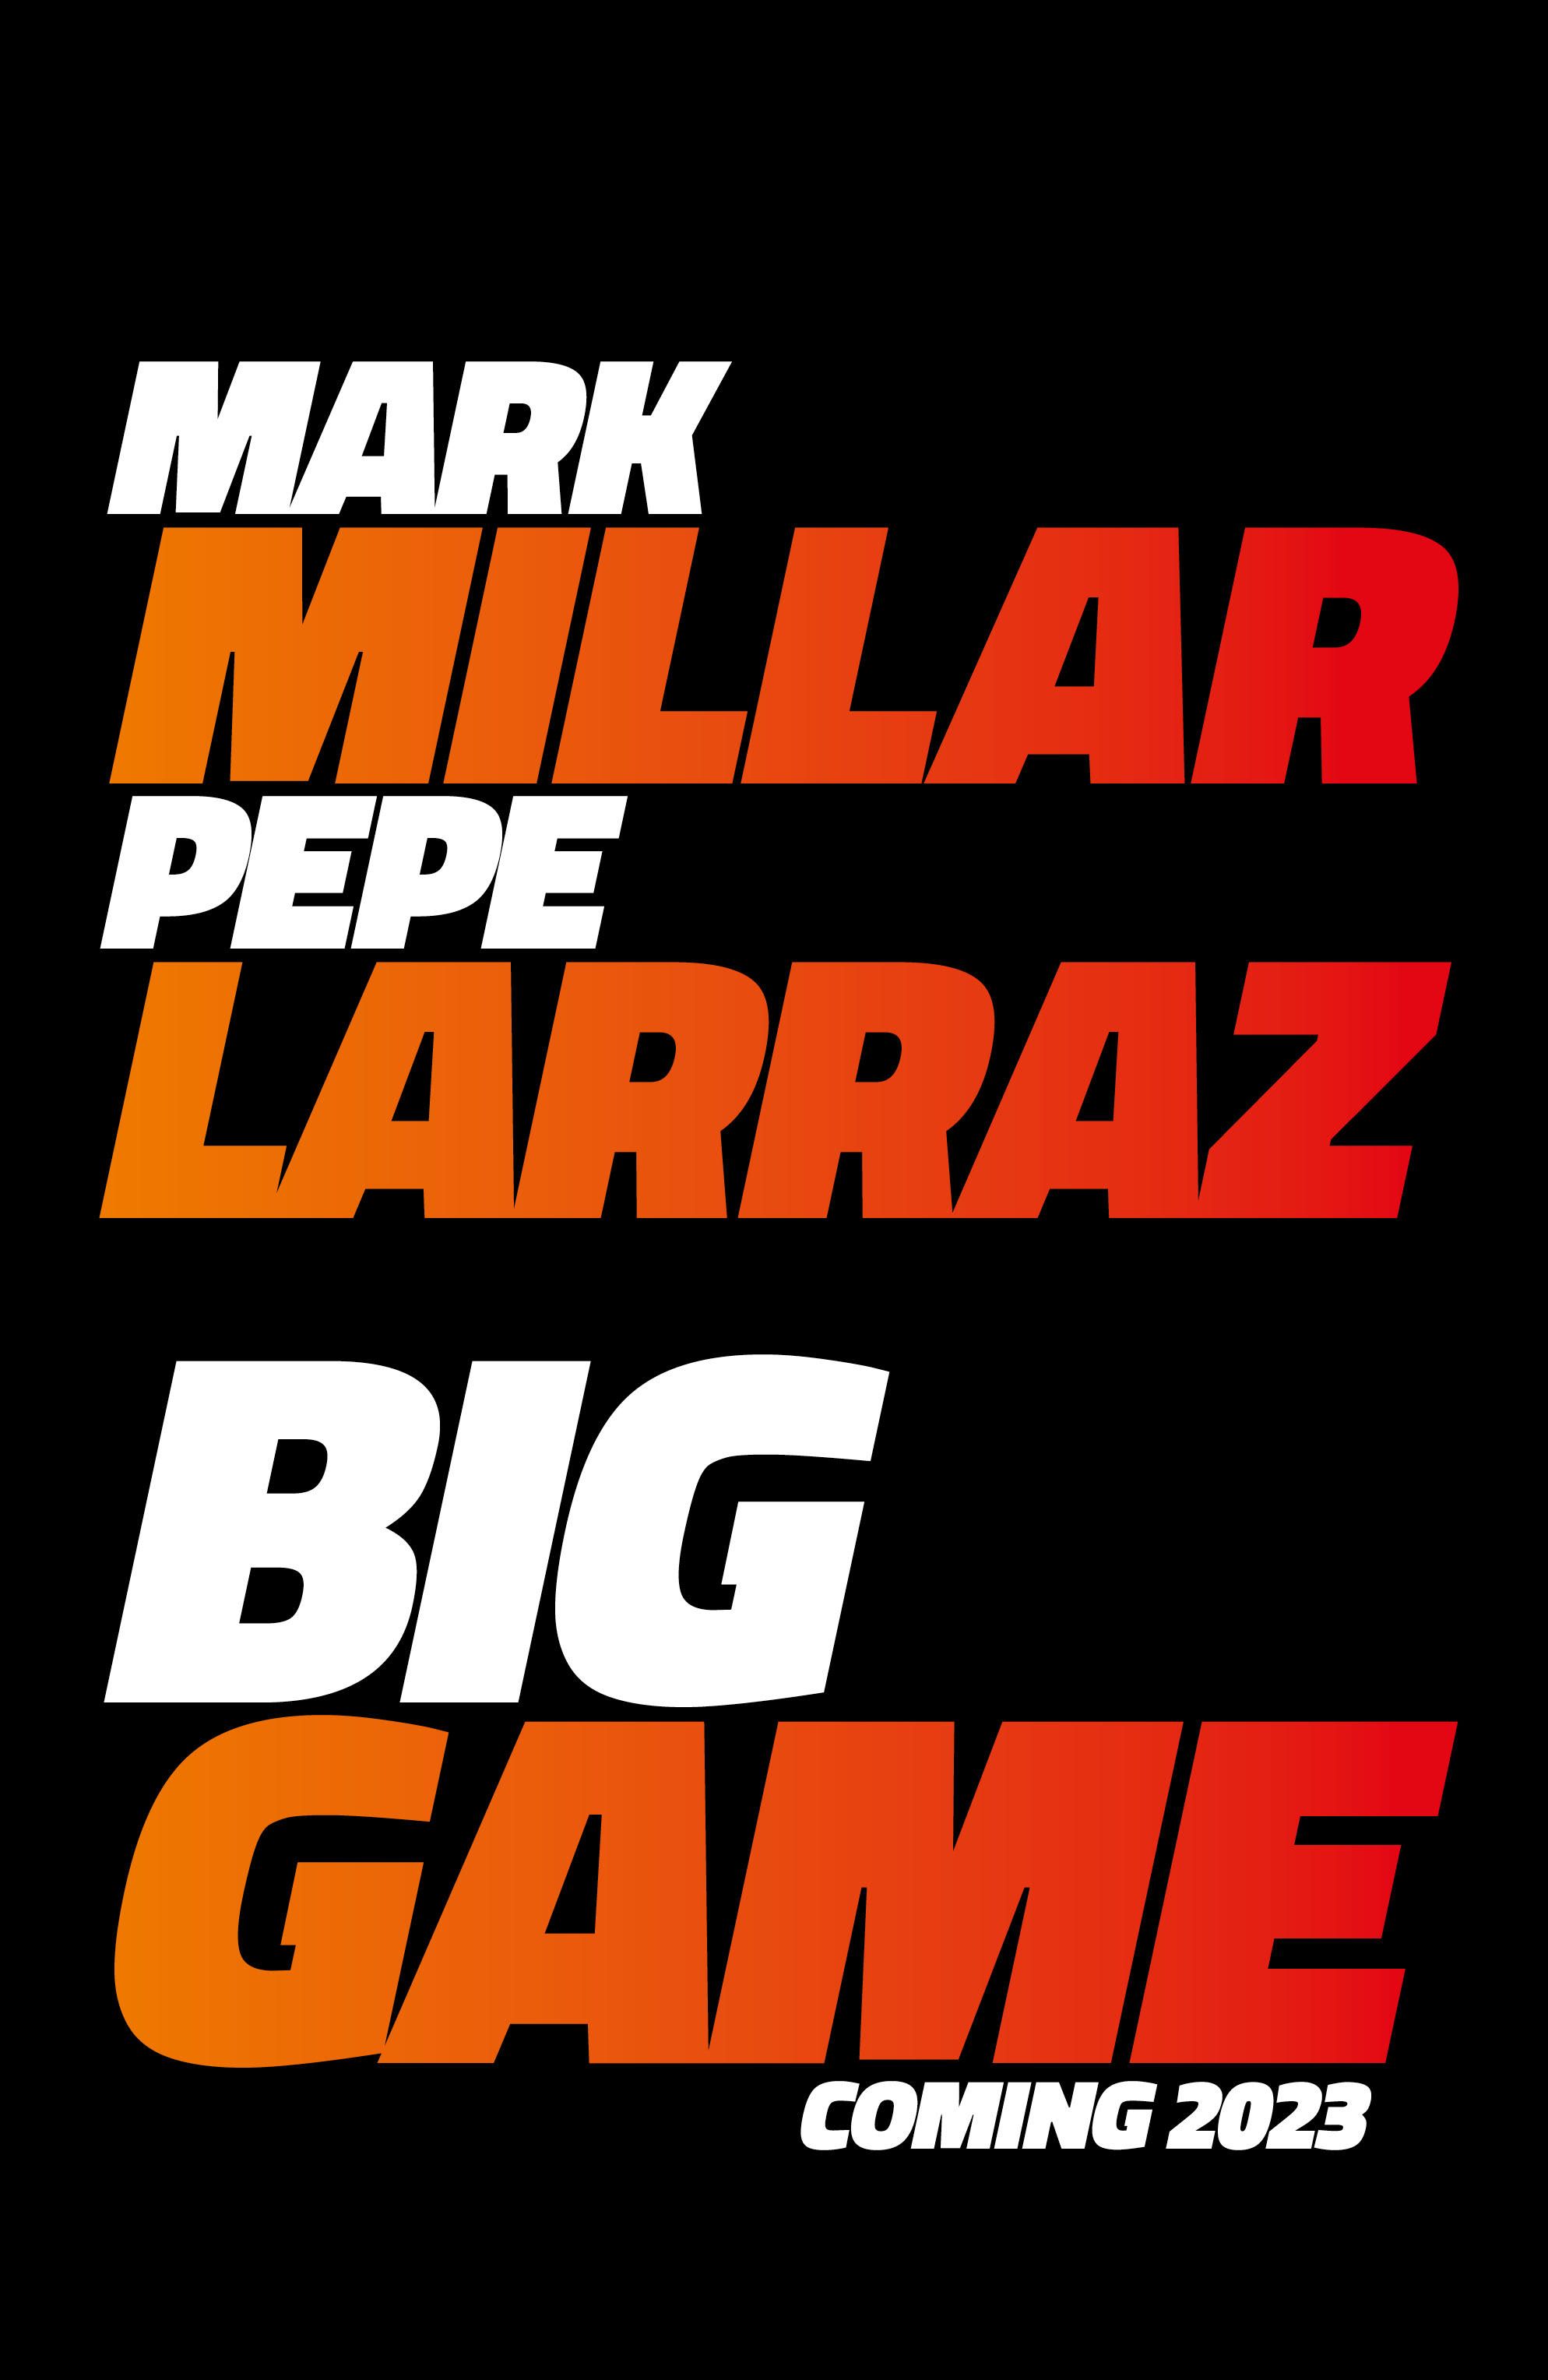 EXCLUSIVE: X-Men's Pepe Larraz Joins Mark Millar for New Series, Big Game